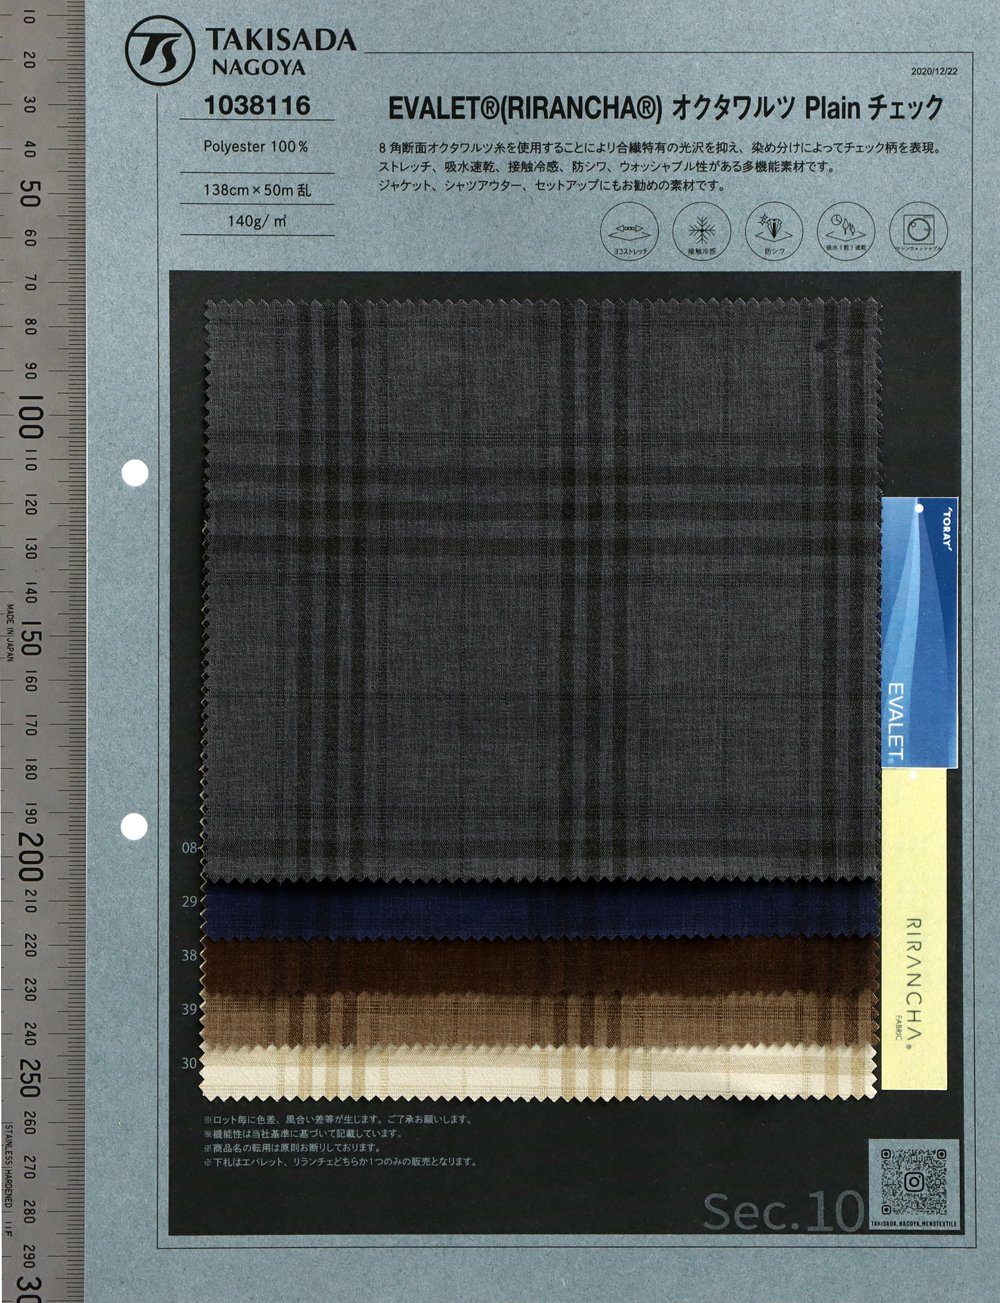 1038116 EVALET® RIRANCHE ARAN CHECK Stretch[Textilgewebe] Takisada Nagoya